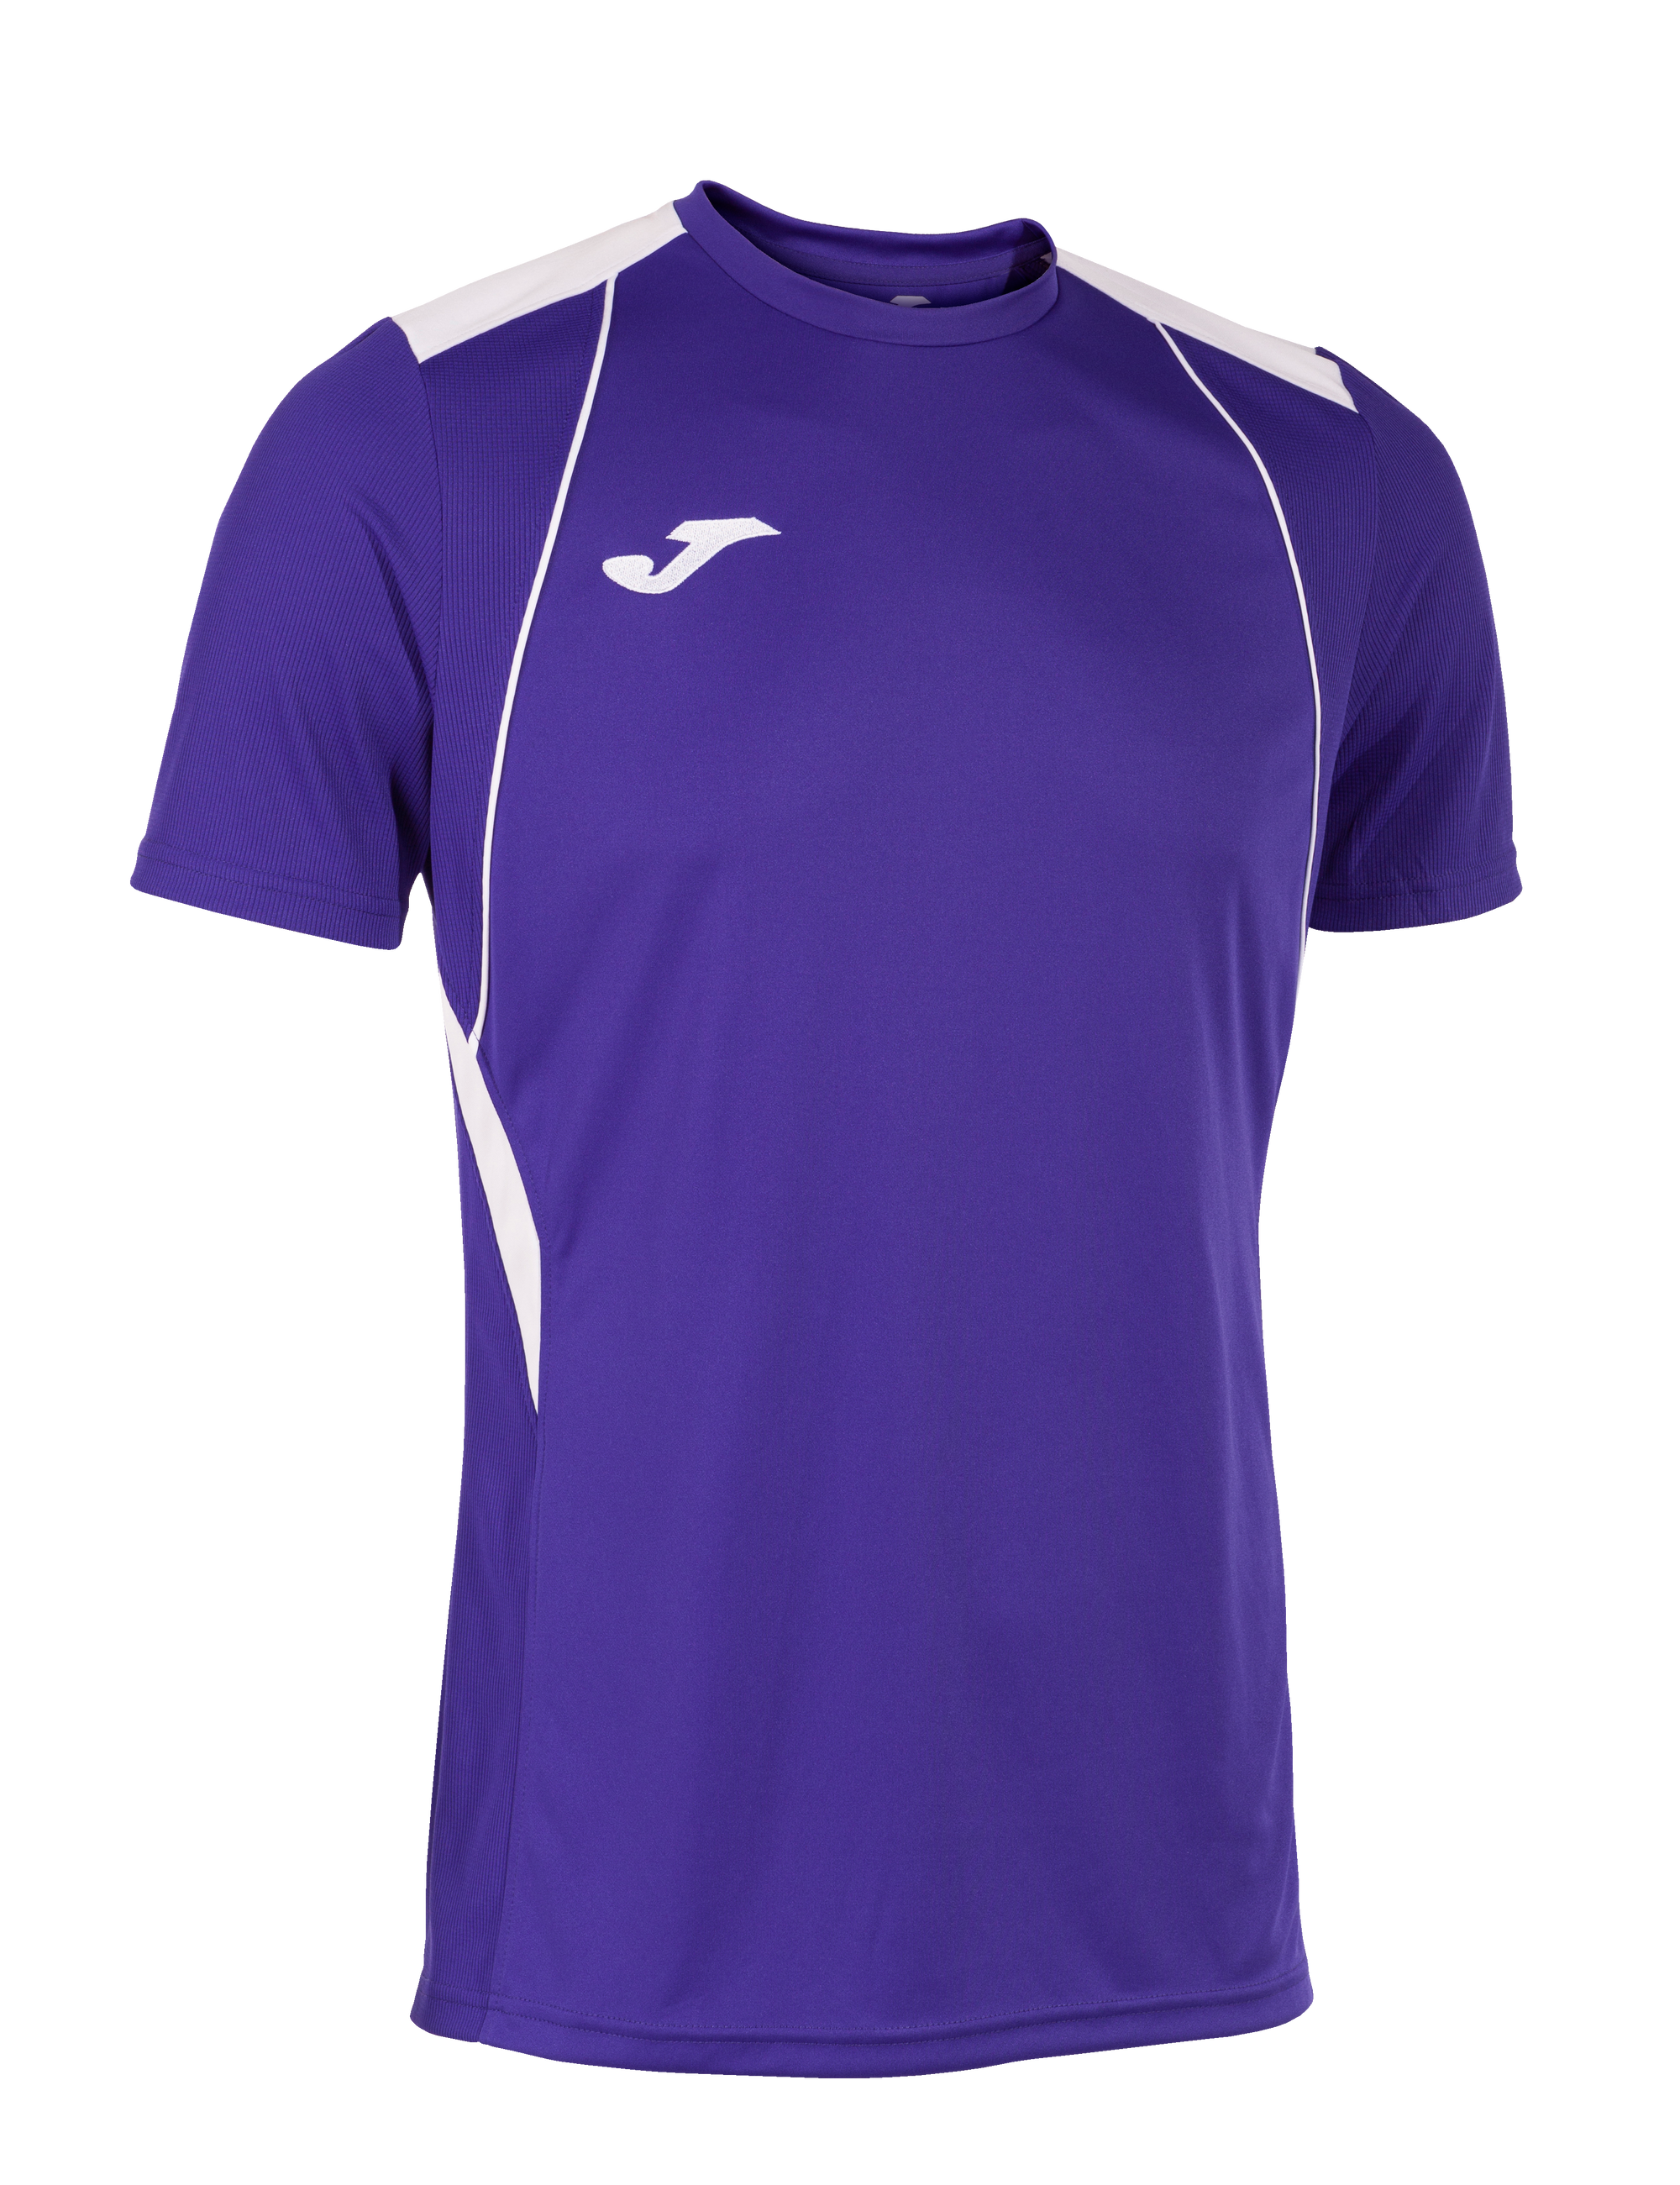 Joma Championship VII Short Sleeve T-Shirt - Violet/White